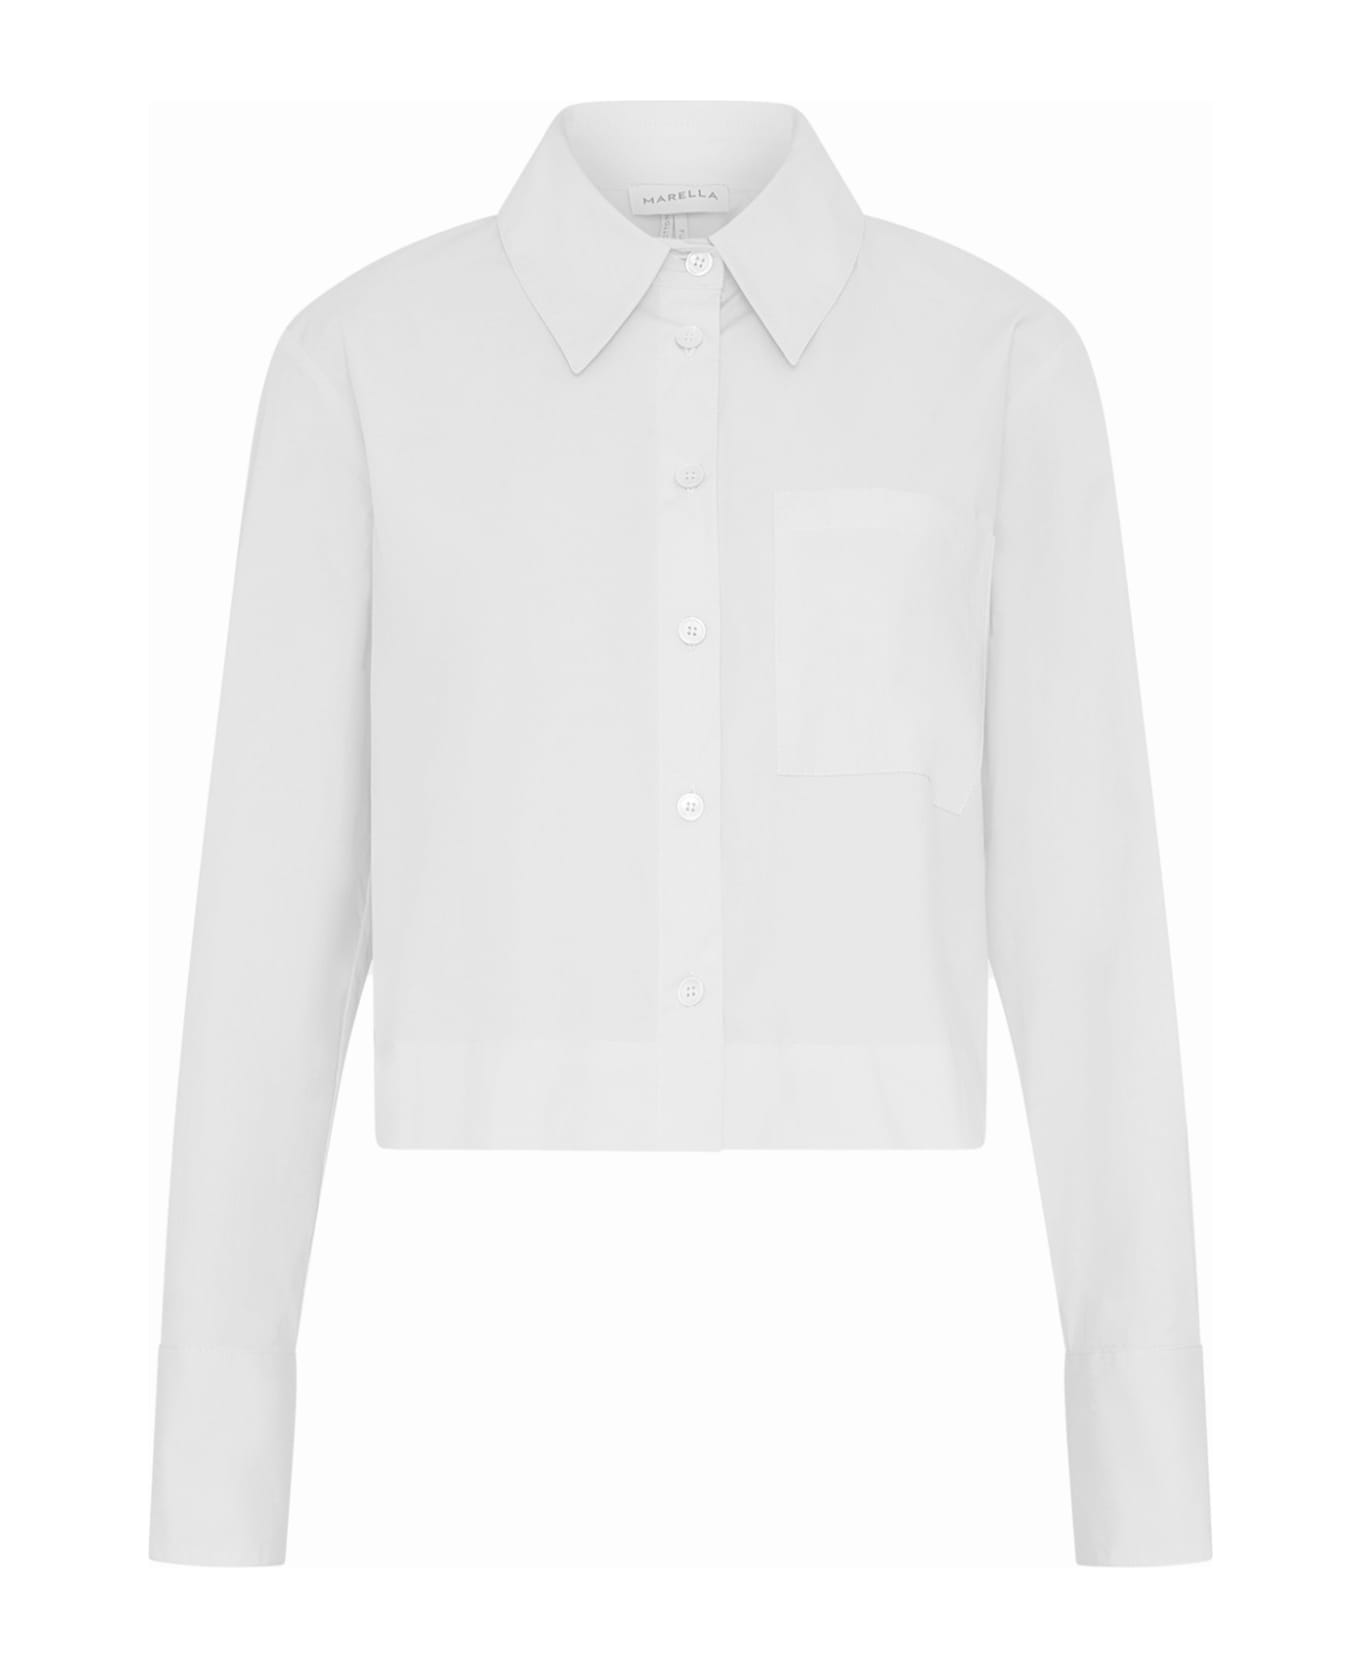 Marella White Long-sleeved Shirt - BIANCO